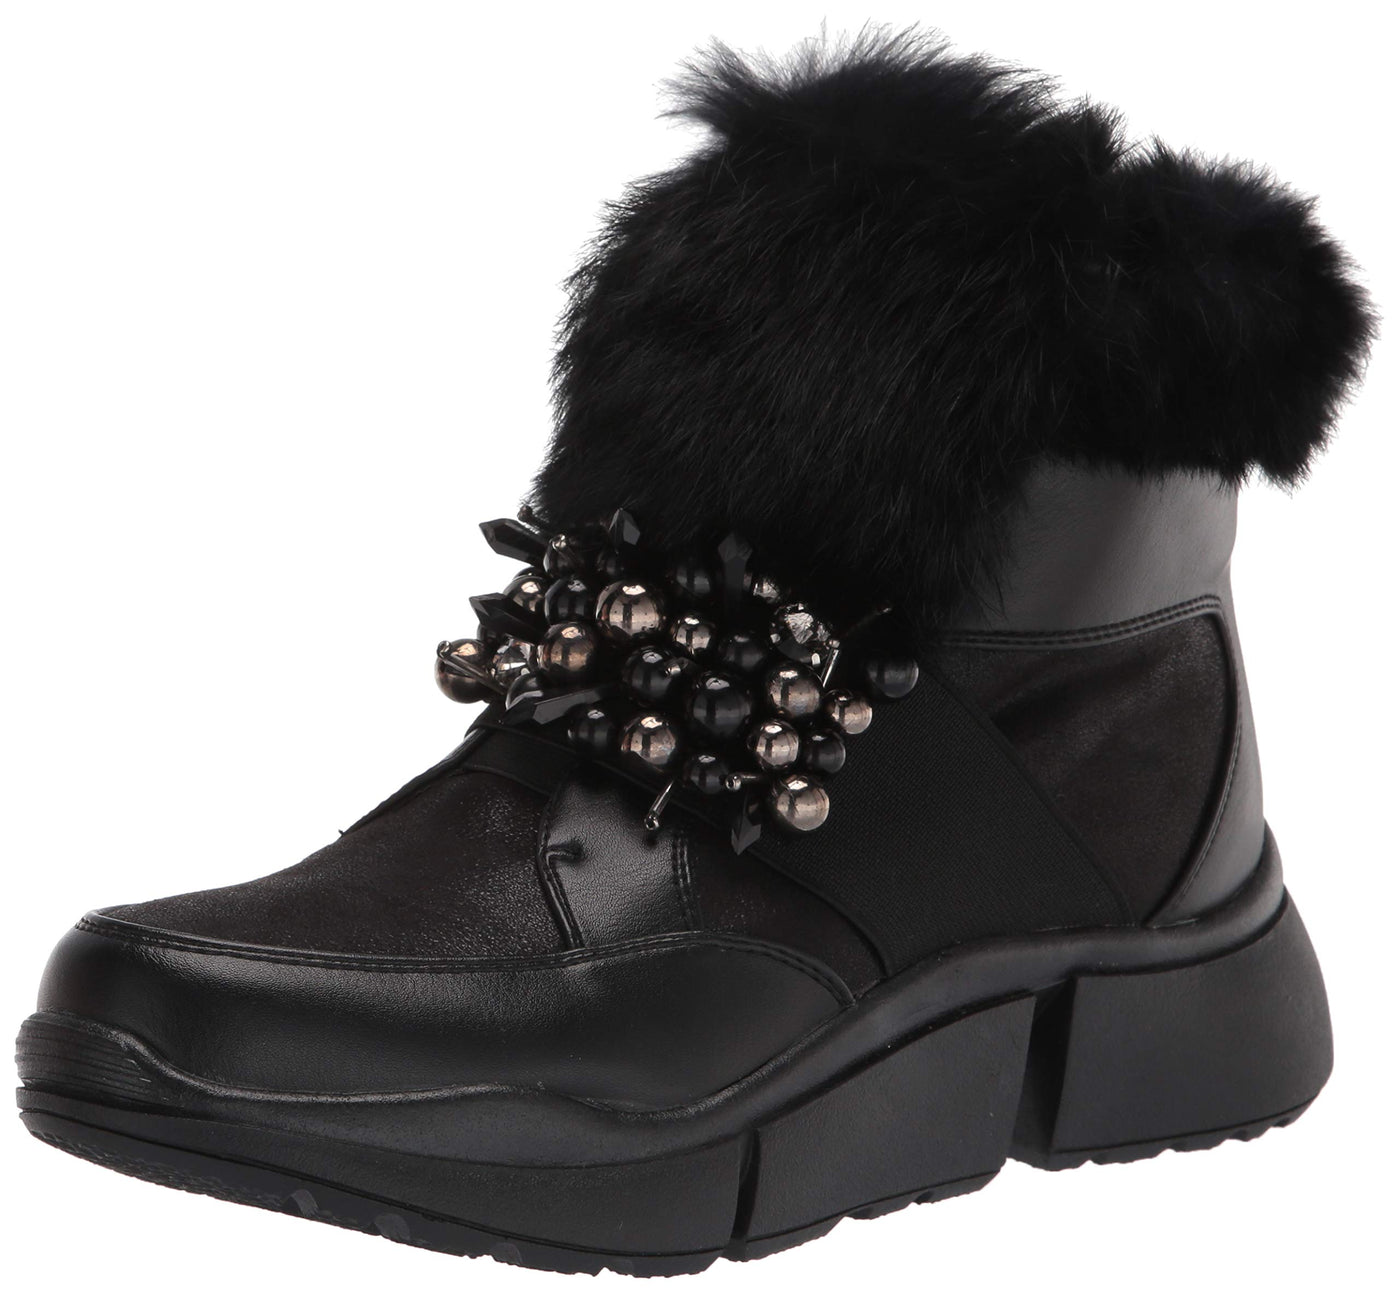 Azura by Spring Step Women's Fashion Boot, Black, 5.5-6